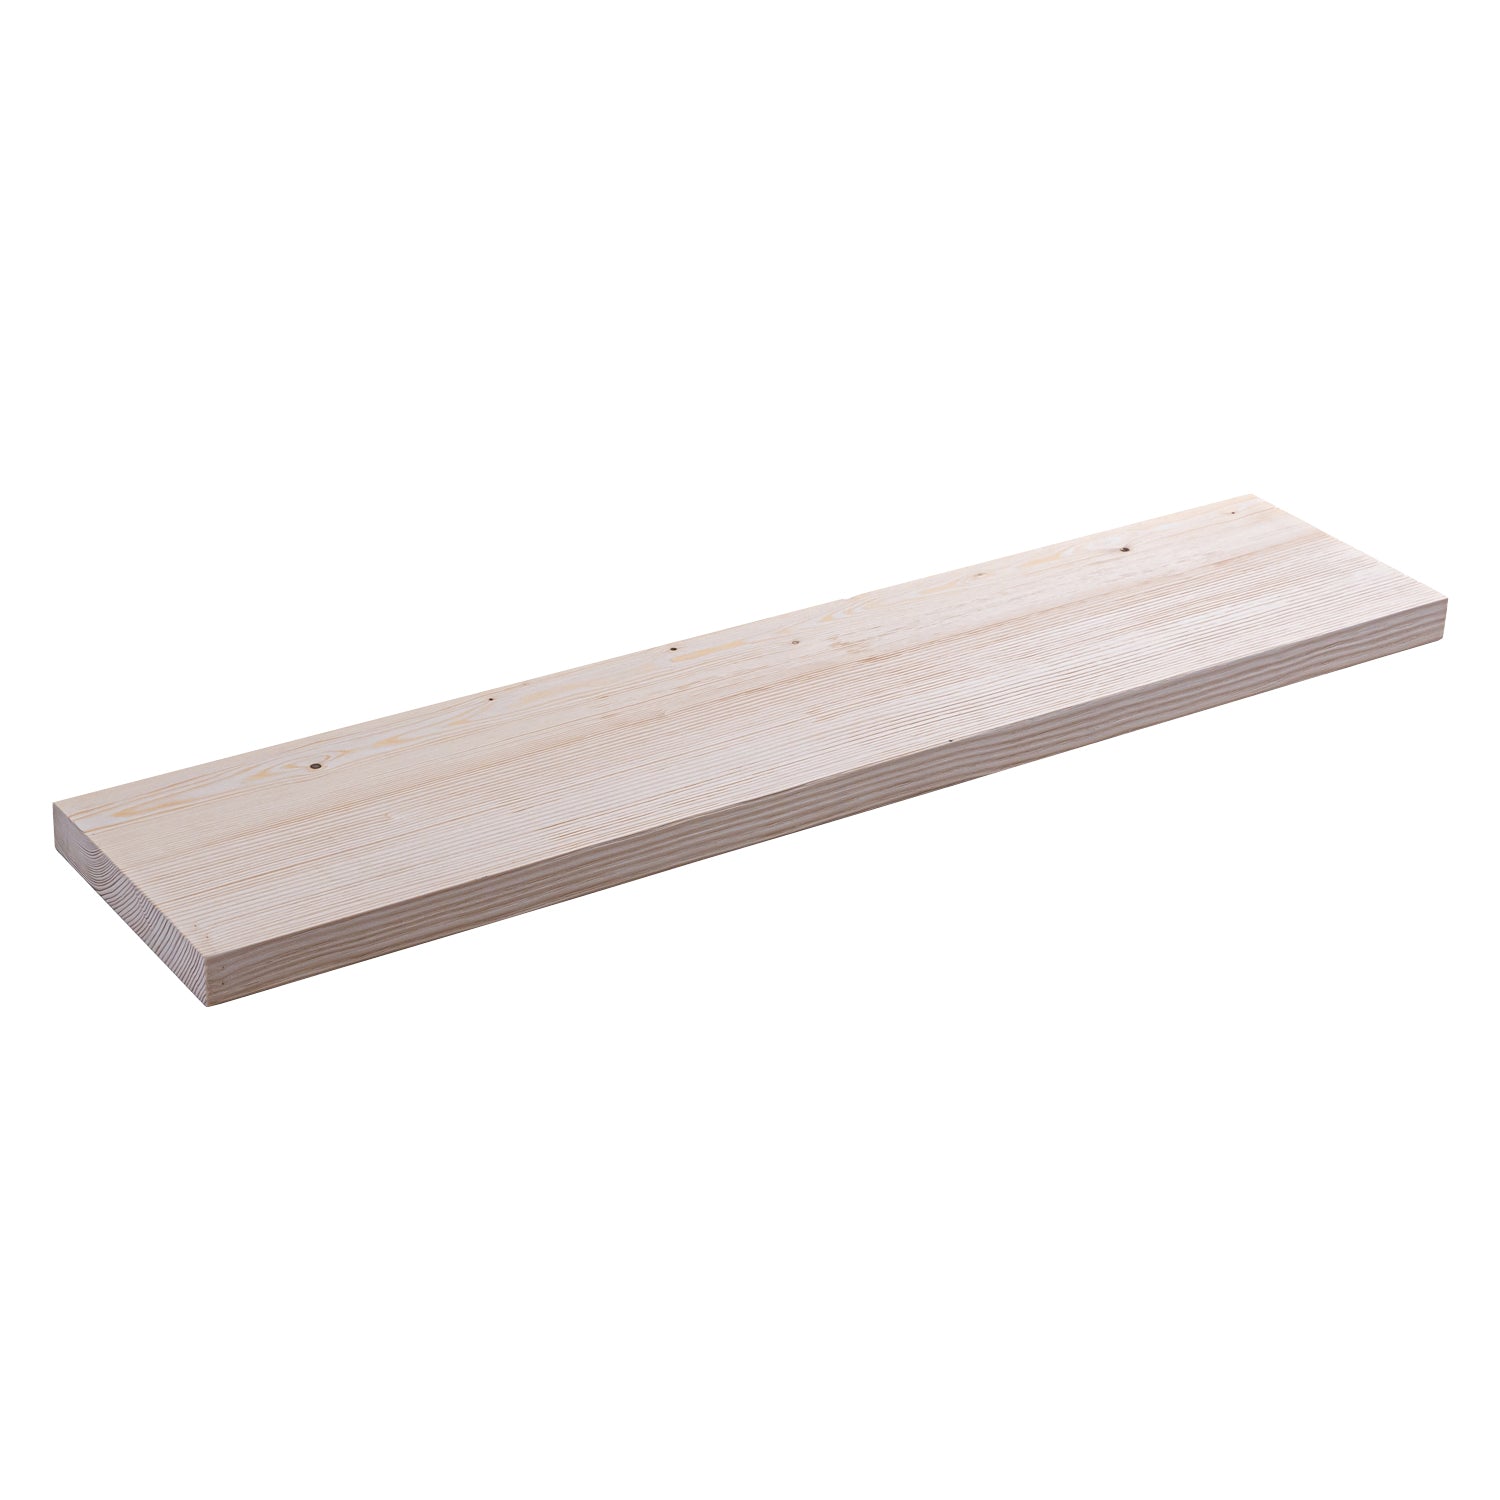 White Wood Shelf - 32mm thick